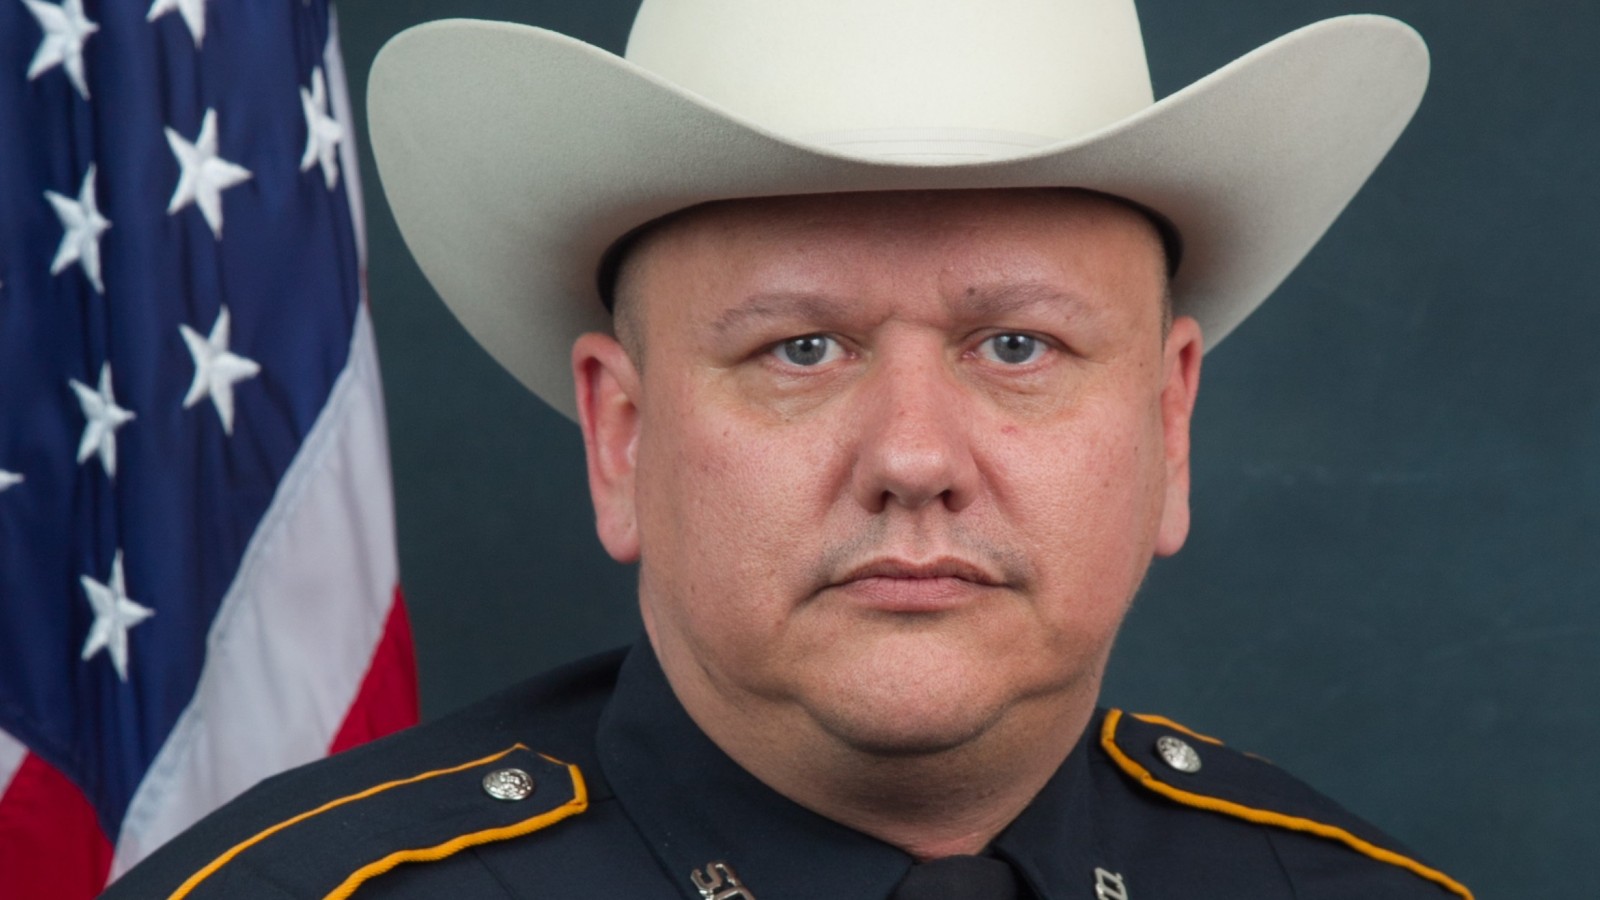 Sheriff's deputy shot while pumping gas at patrol car - CNN.com